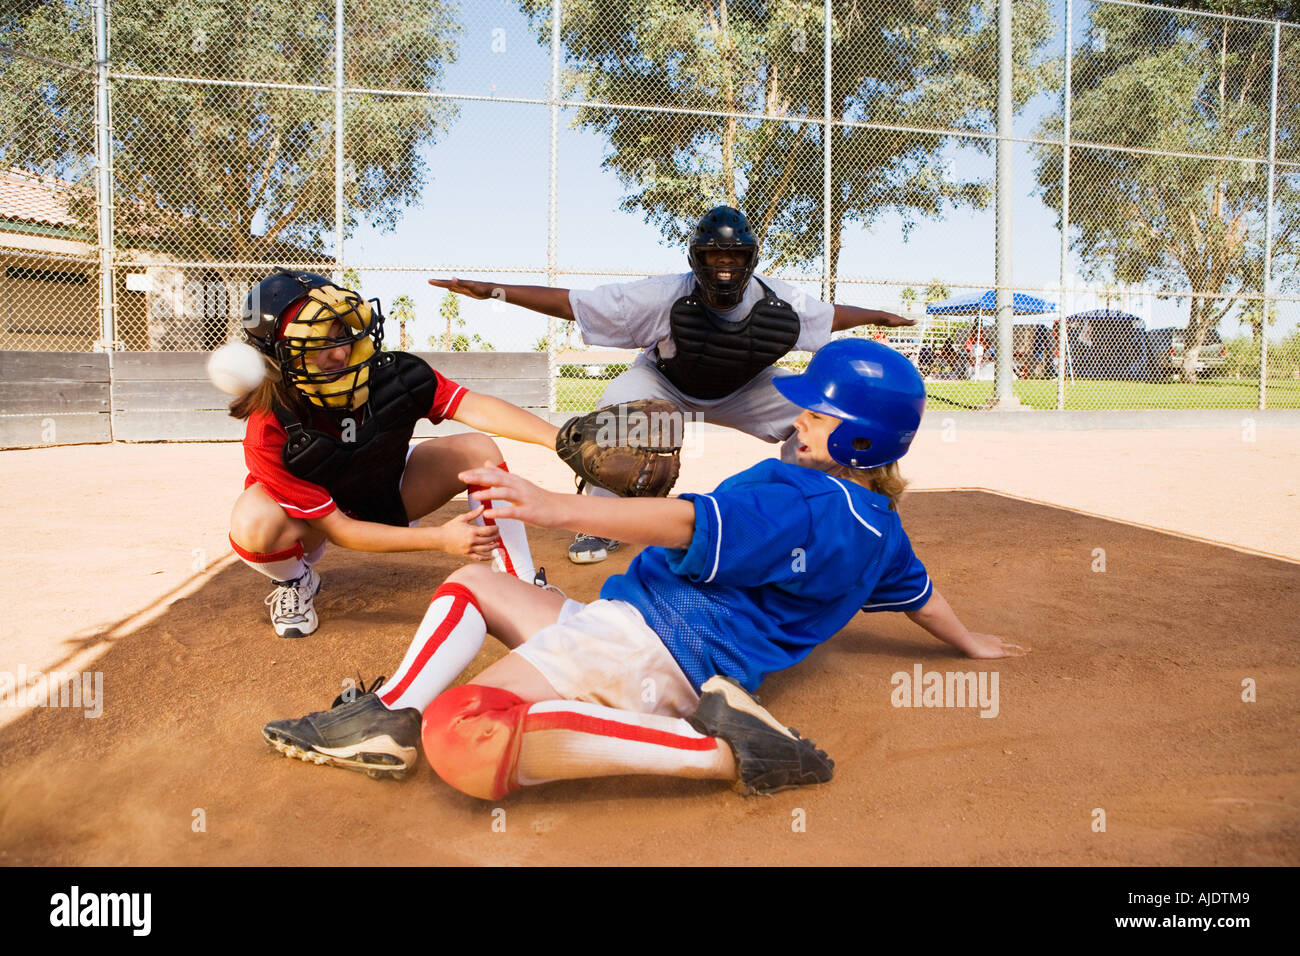 Softball player slideing into home plate Stock Photo